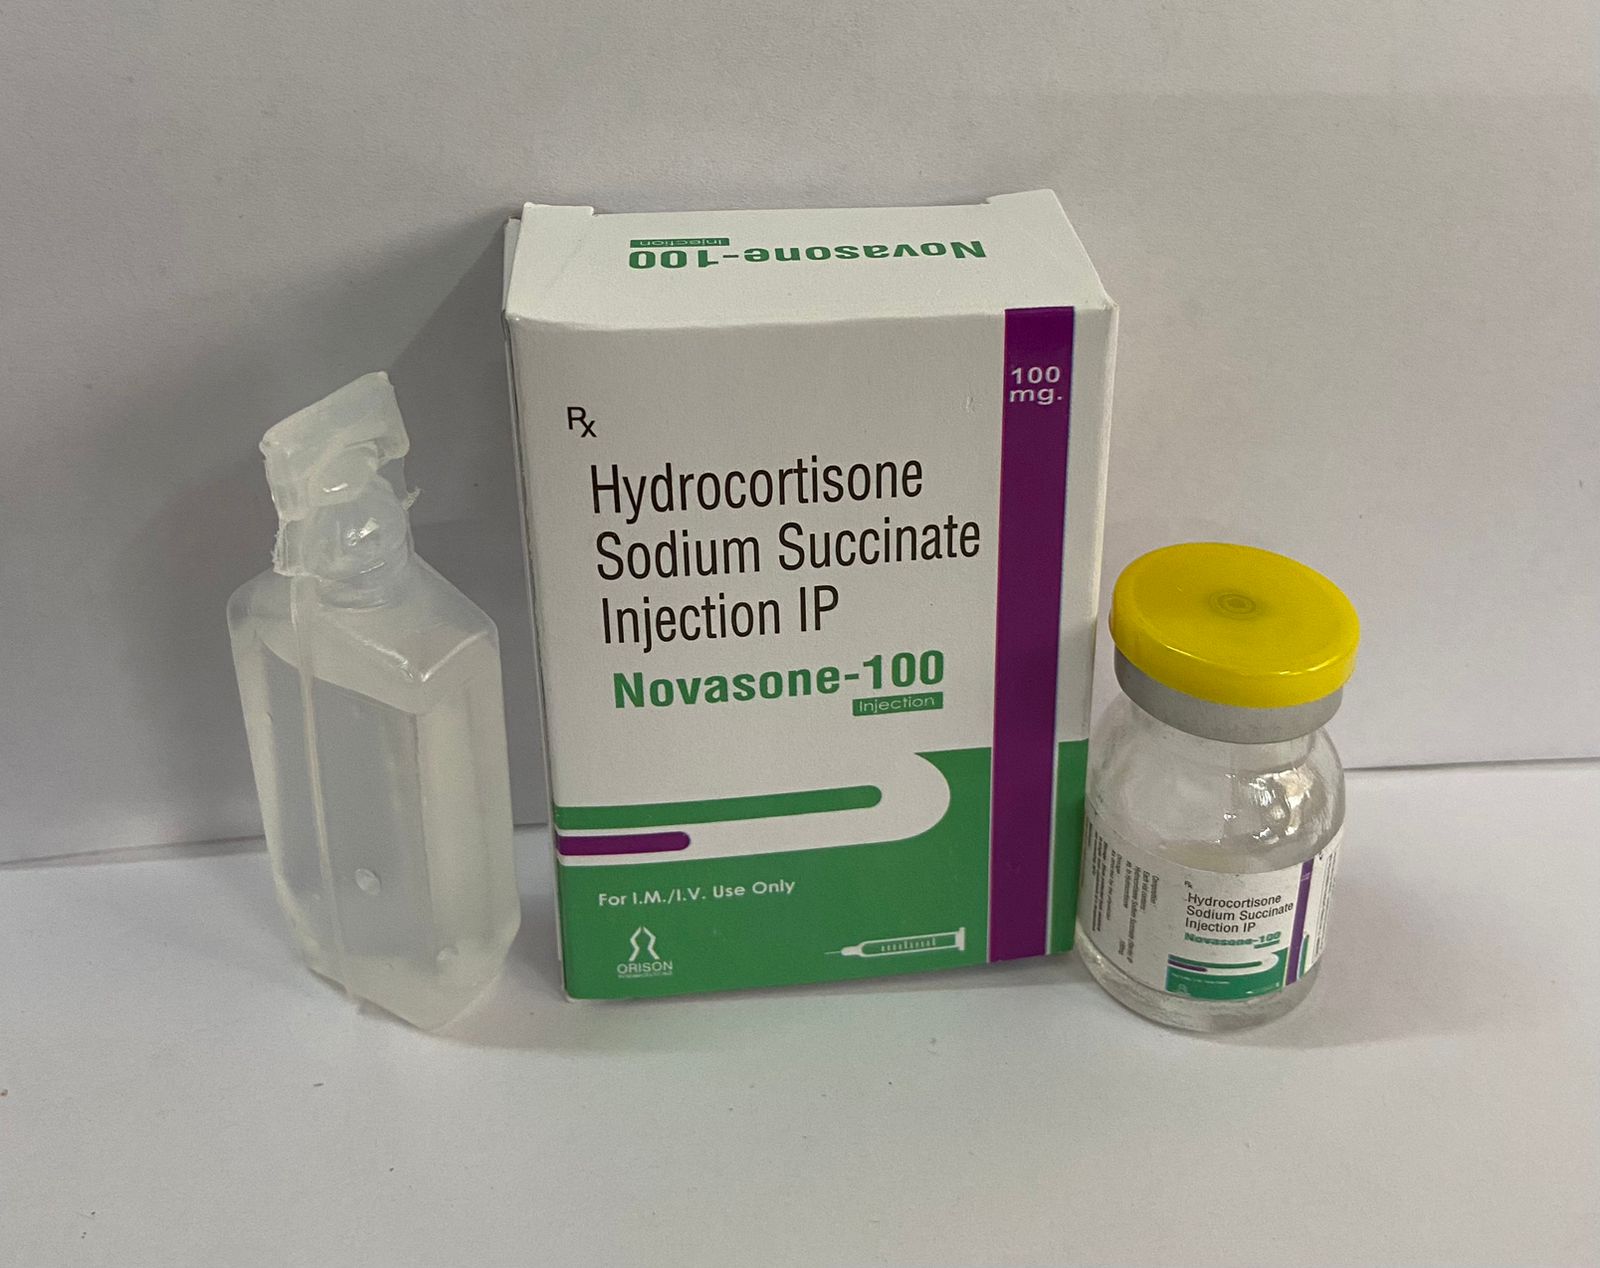 Product Name: Hydrocortisone Sodium Succinate Injection IP, Compositions of Hydrocortisone Sodium Succinate Injection IP are Hydrocortisone Sodium Succinate Injection IP - Orison Pharmaceuticals